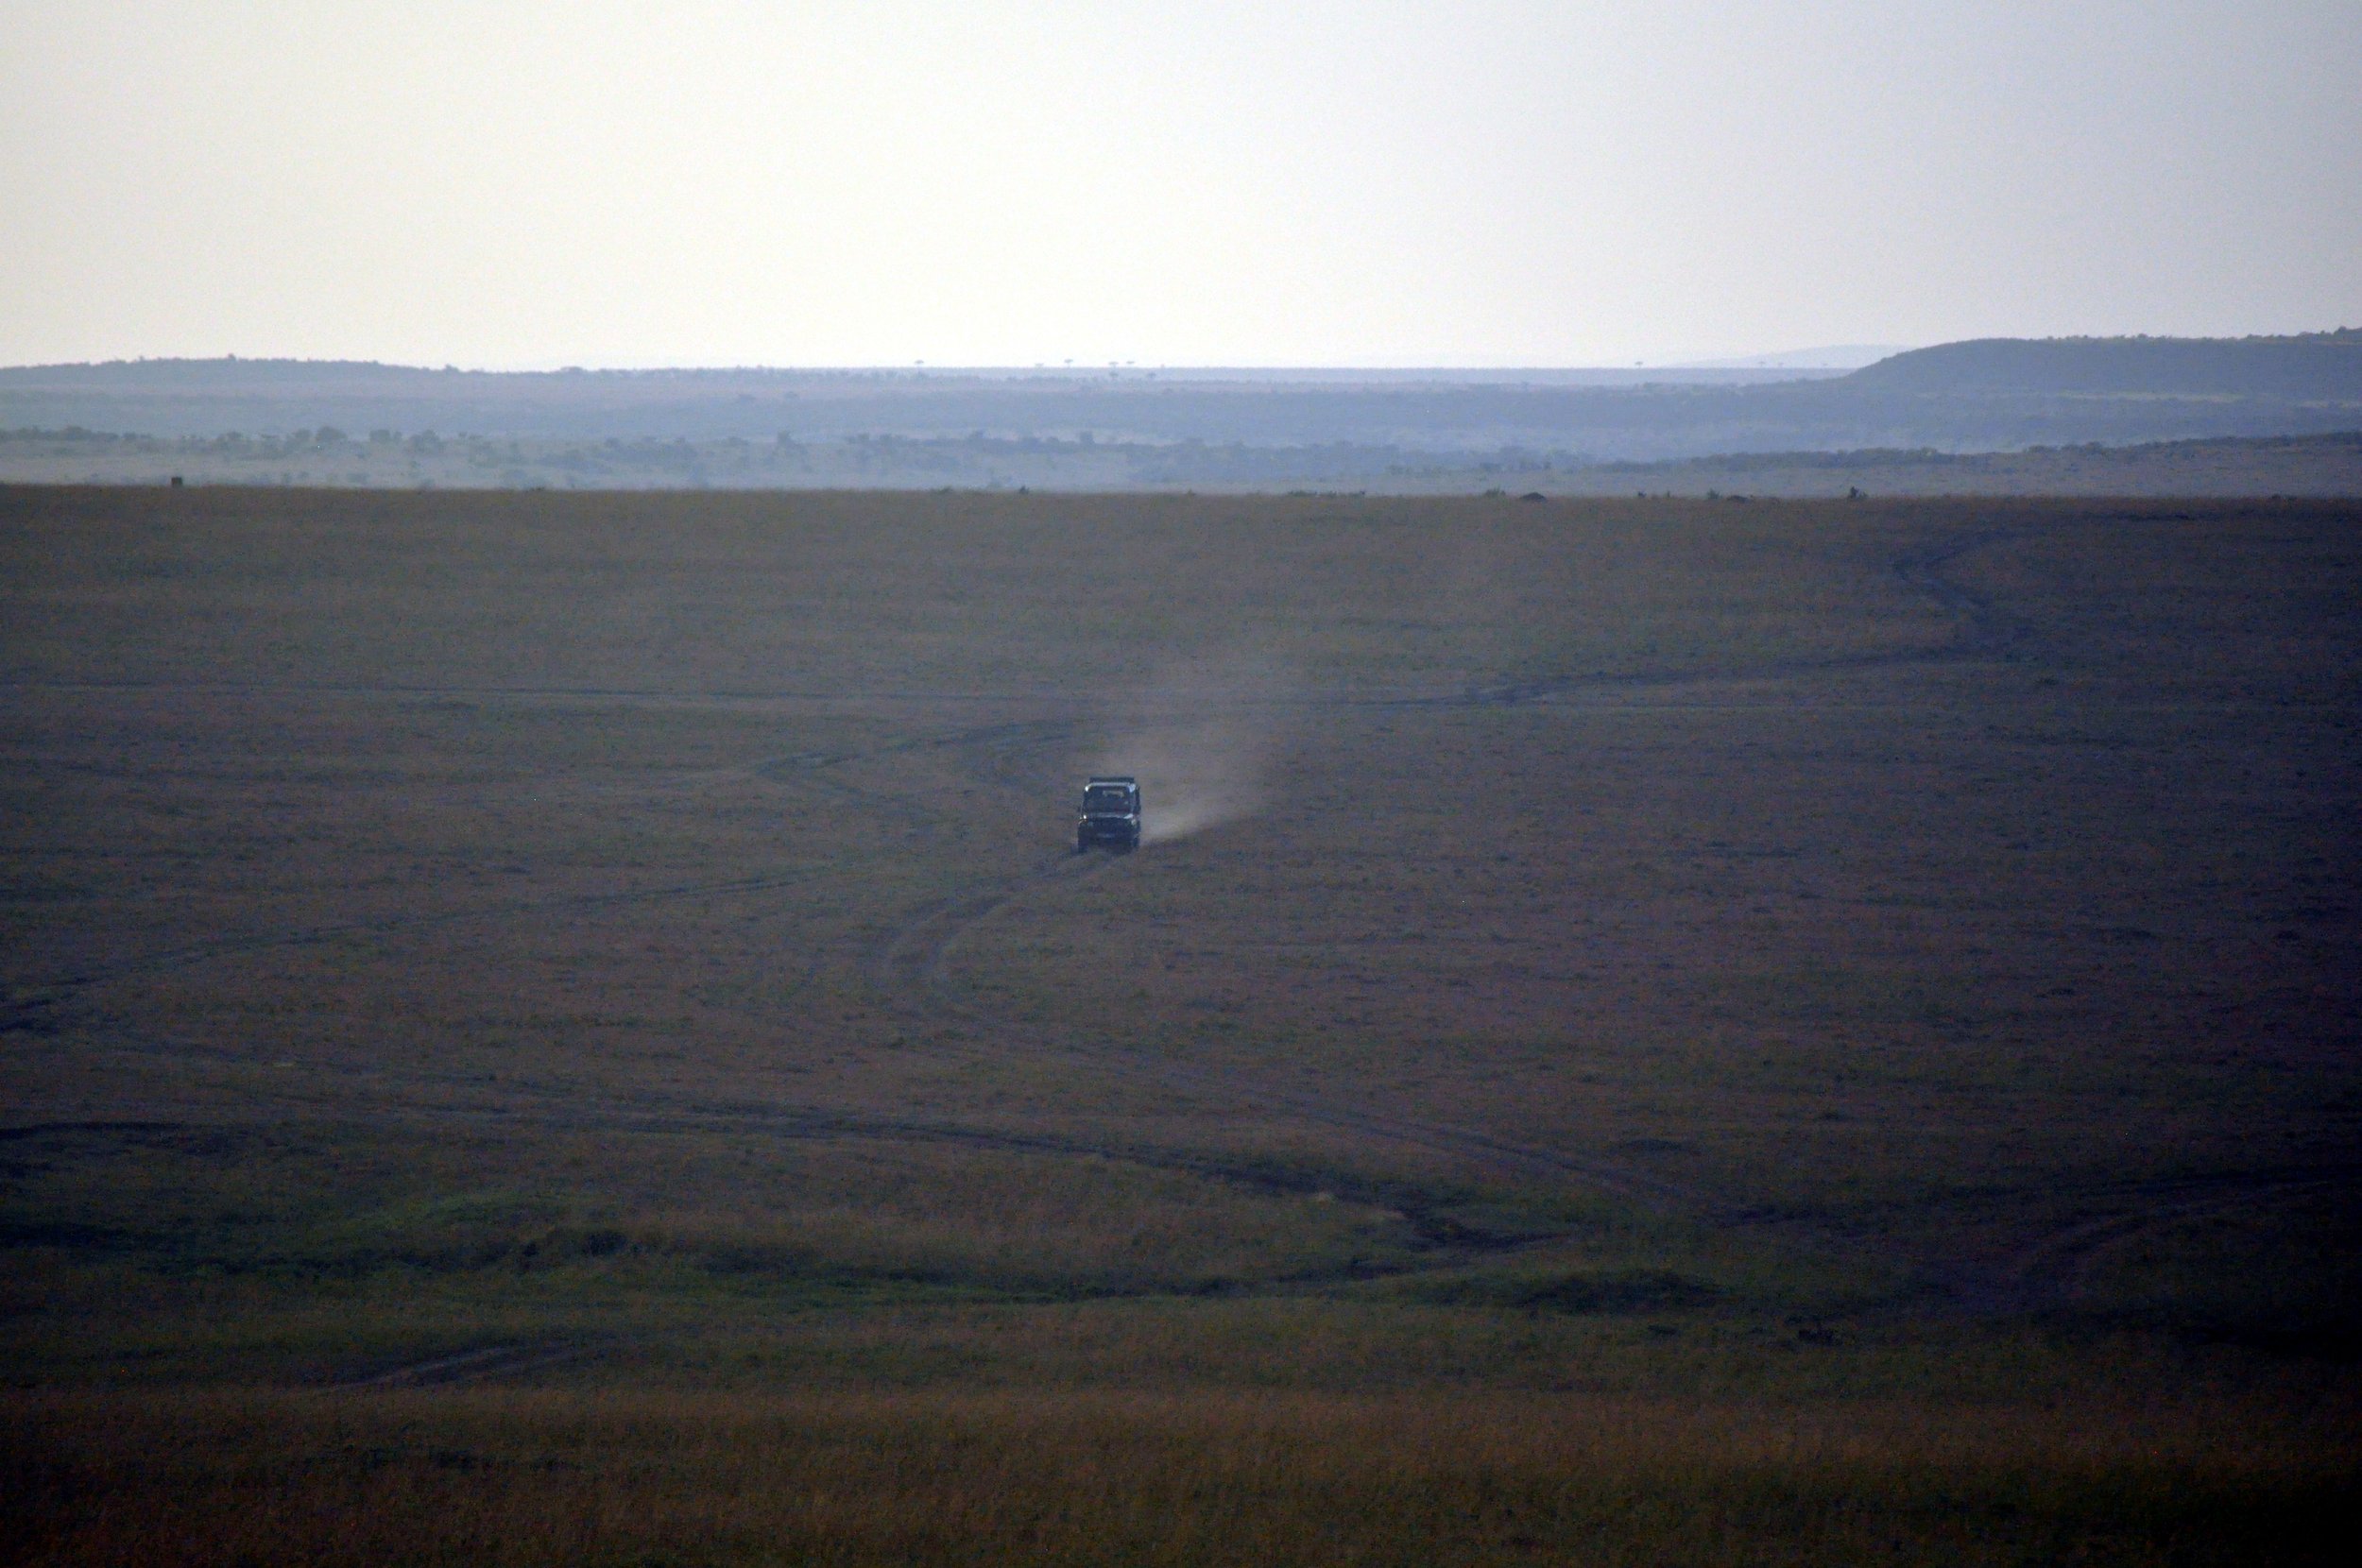 A Safari Vehicle in the Distance